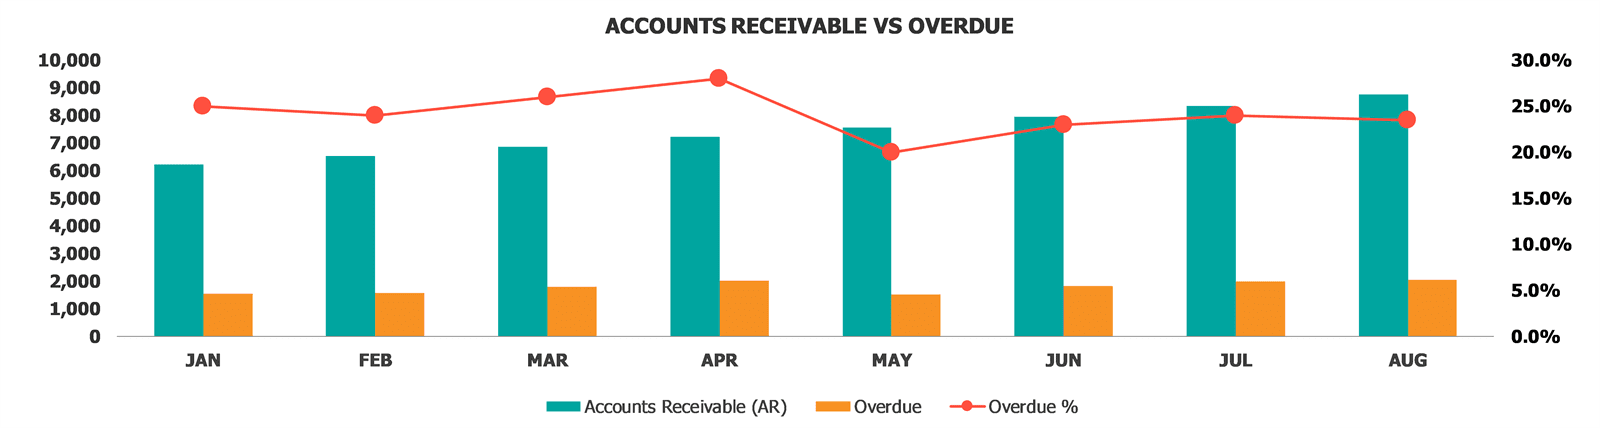 Accounts Receivable Dashboard Excel Template Accounts Receivable Vs Overdue